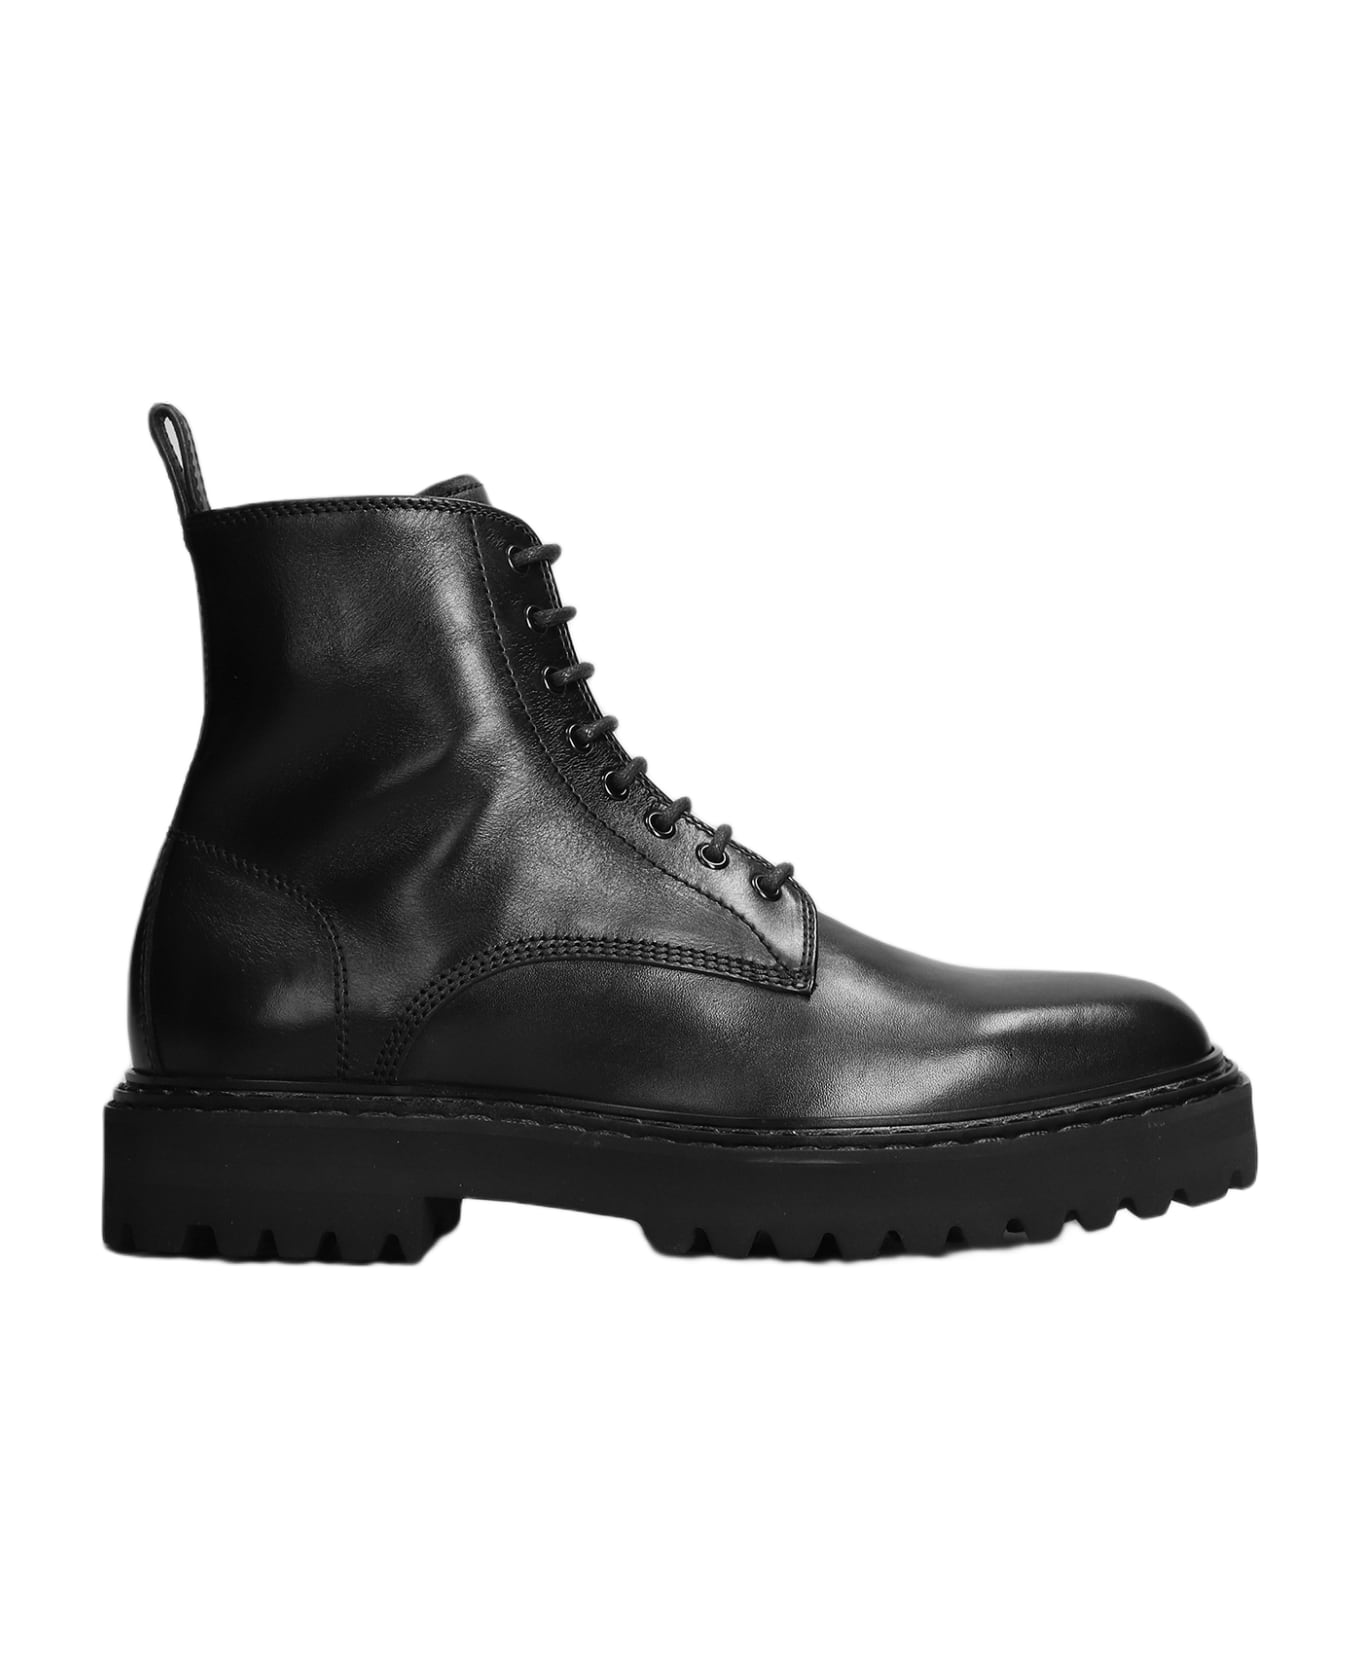 Officine Creative Pistols 002 Combat Boots In Black Leather - black